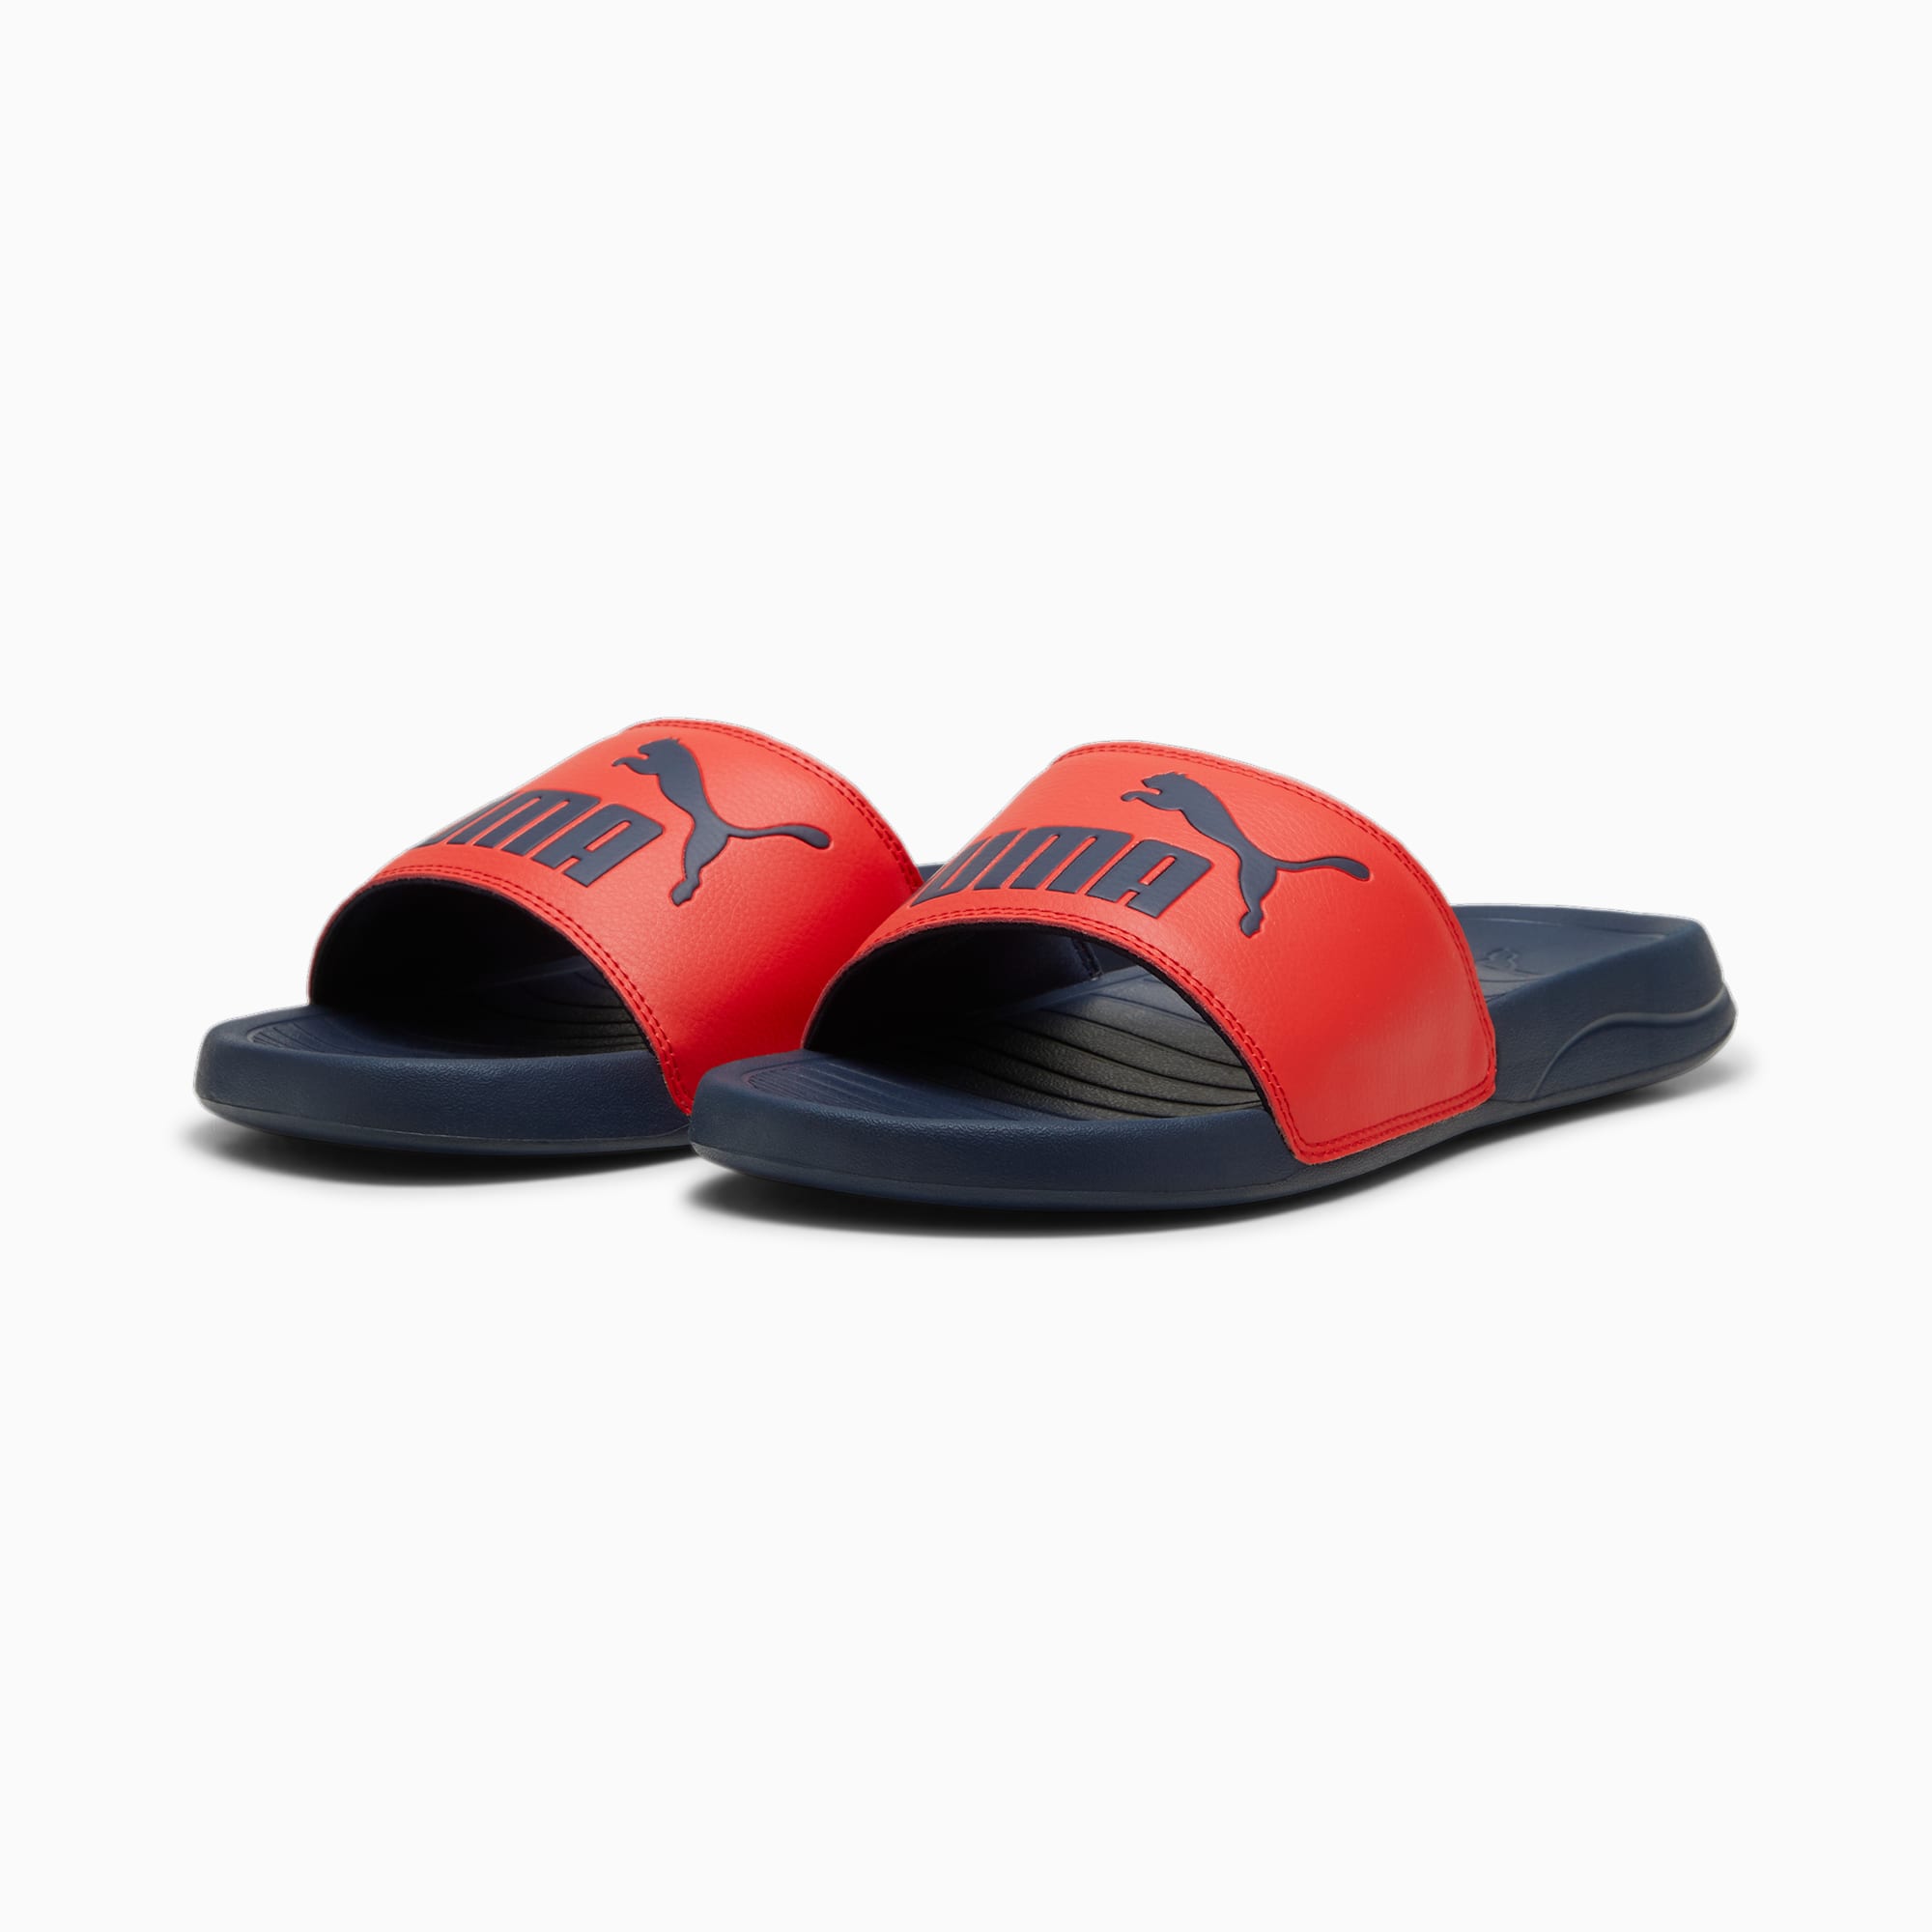 PUMA Popcat 20 Sandalen, Rot/Blau, Größe: 48.5, Schuhe